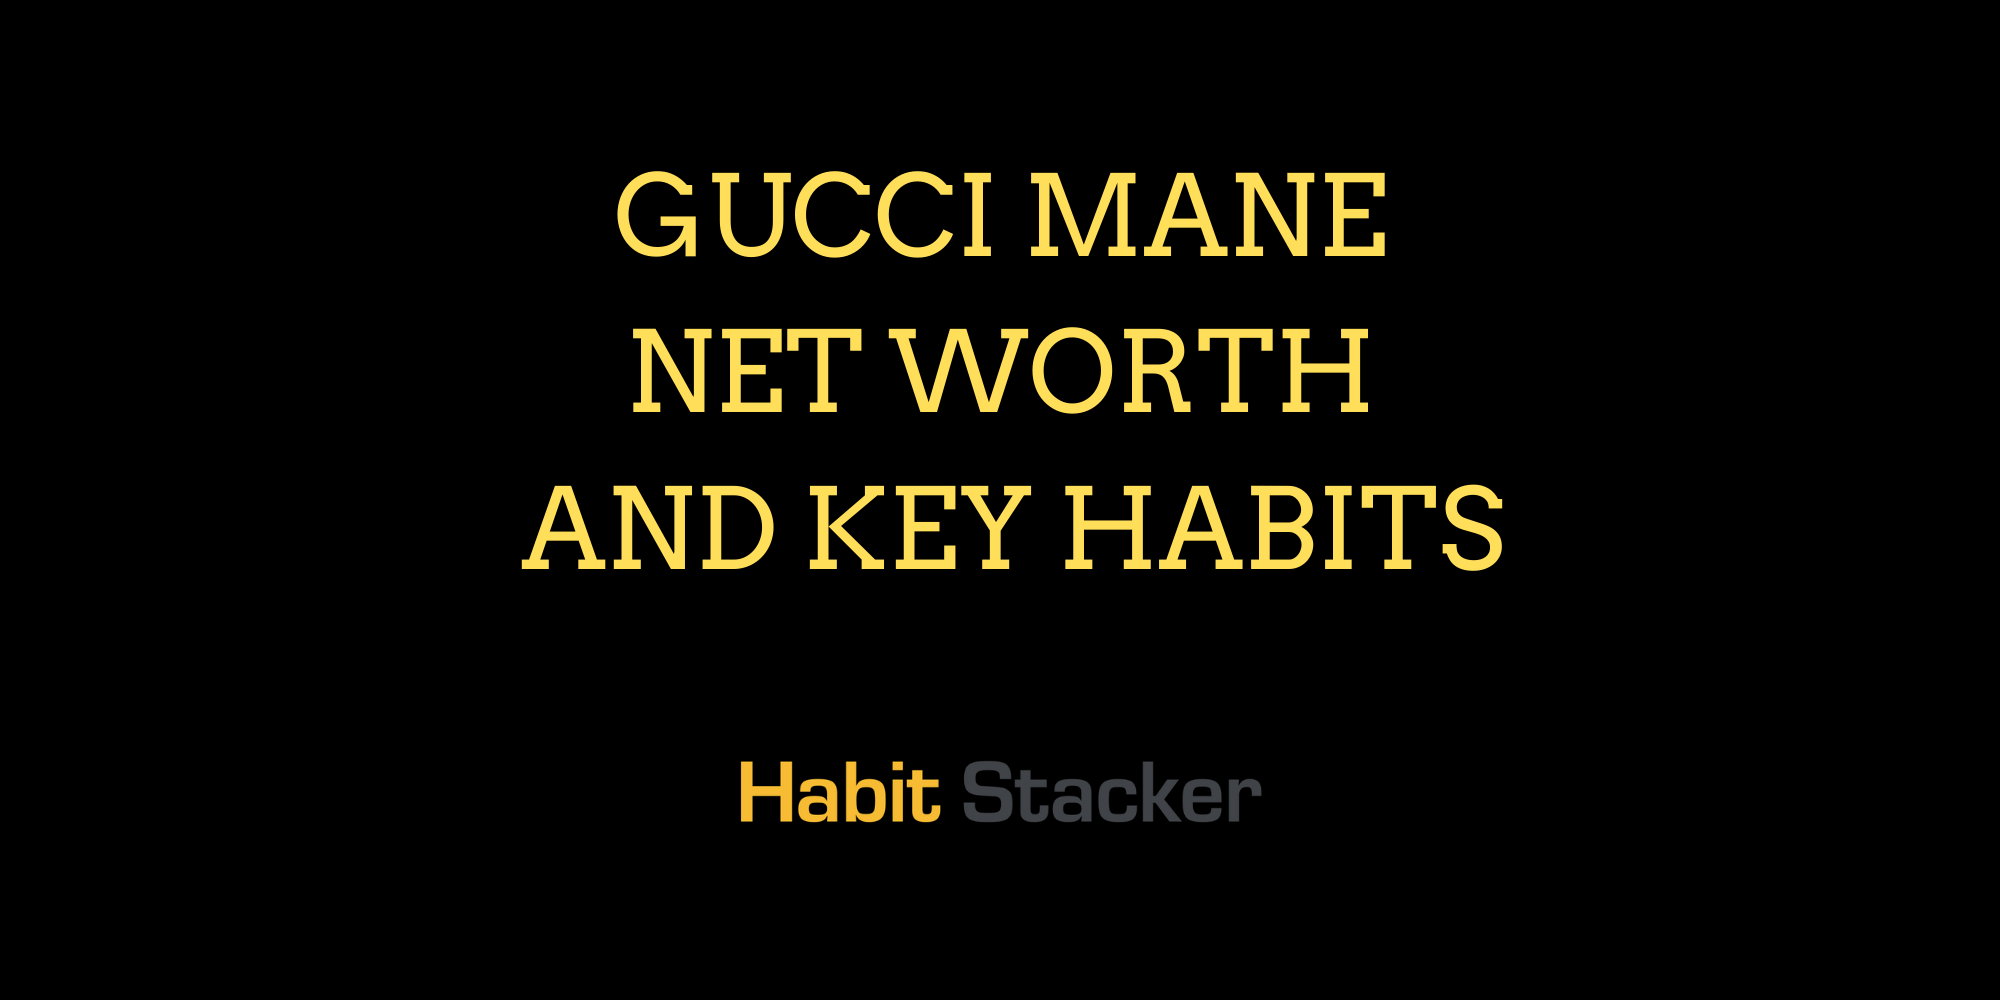 Gucci Mane Net Worth and Key Habits